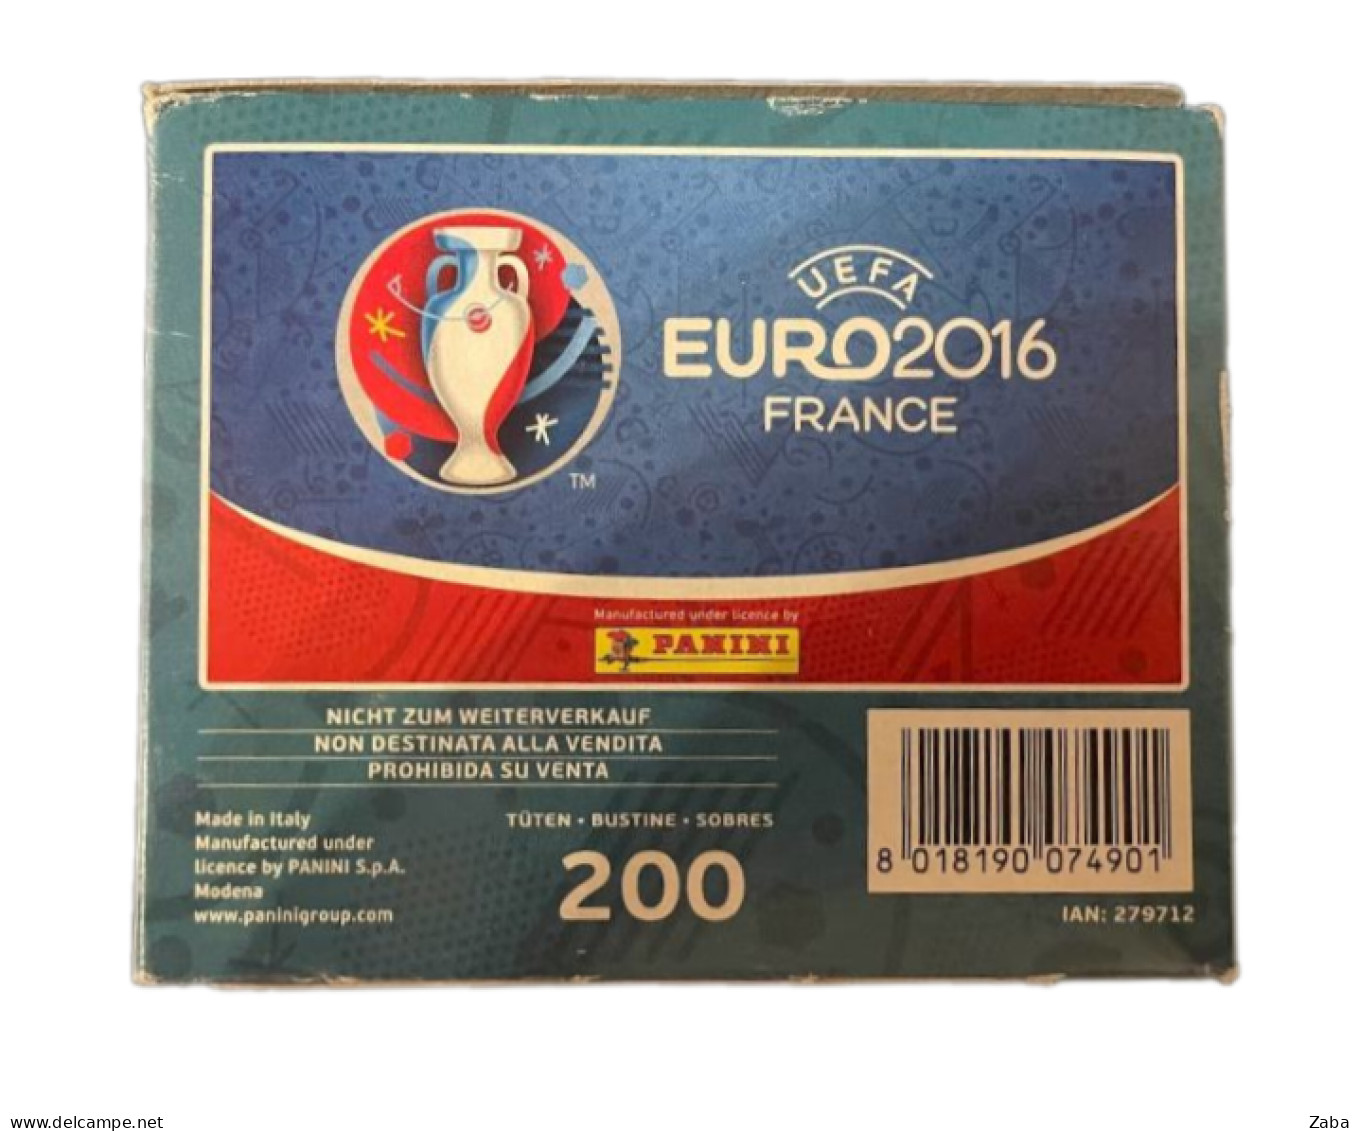 Panini EURO 2016 Lidl Box, 200 Packets, Not Opened! - Italienische Ausgabe